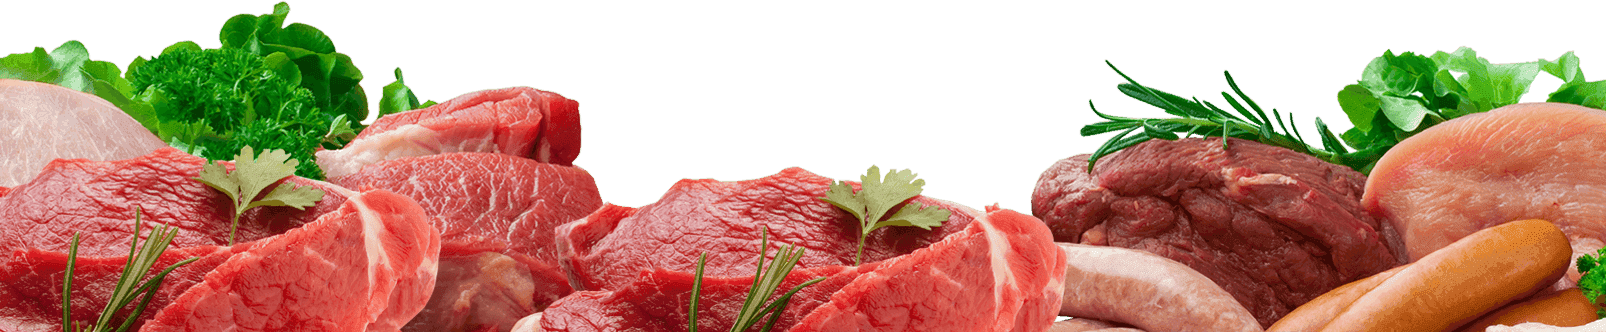 Meats HD PNG - 119405